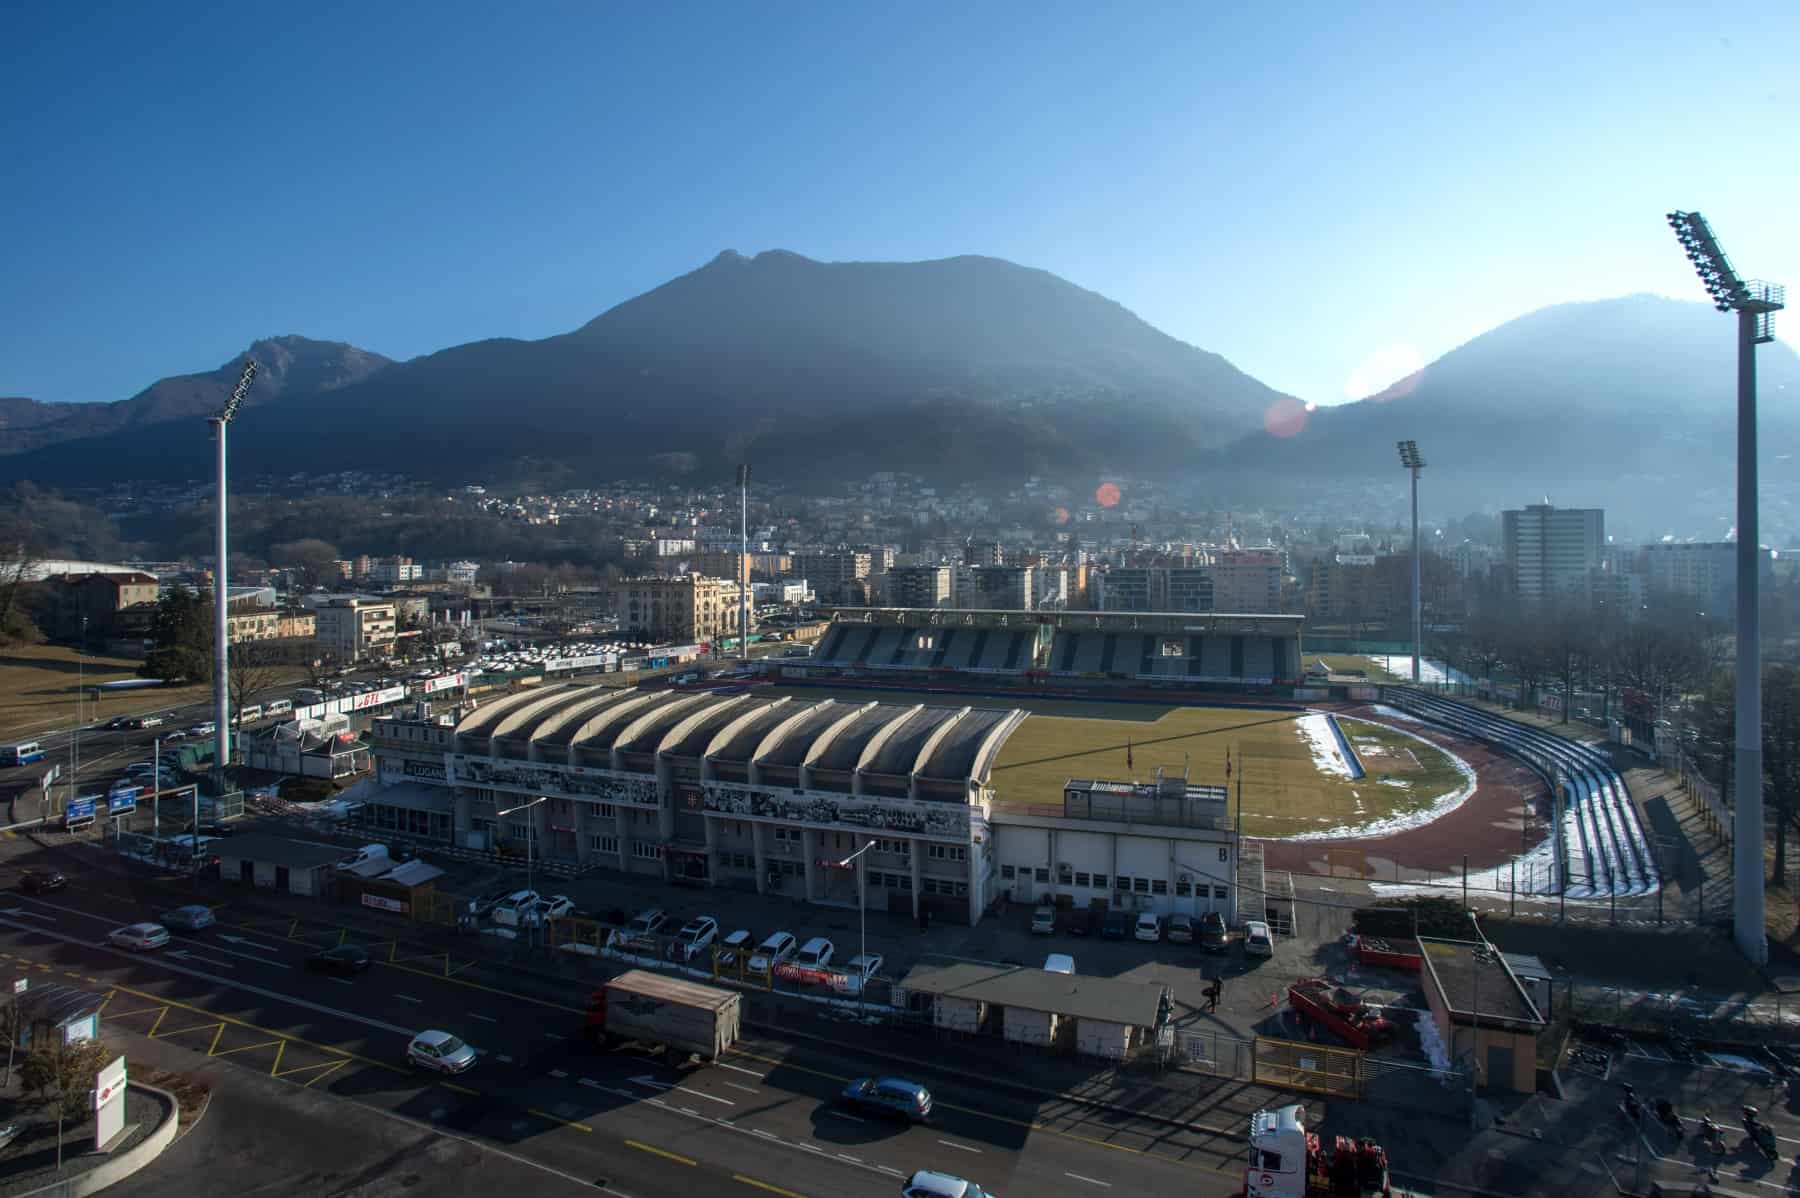 FC Lugano - FC Rapperswil-Jona, Stadio Cornaredo, Lugano - Hinto